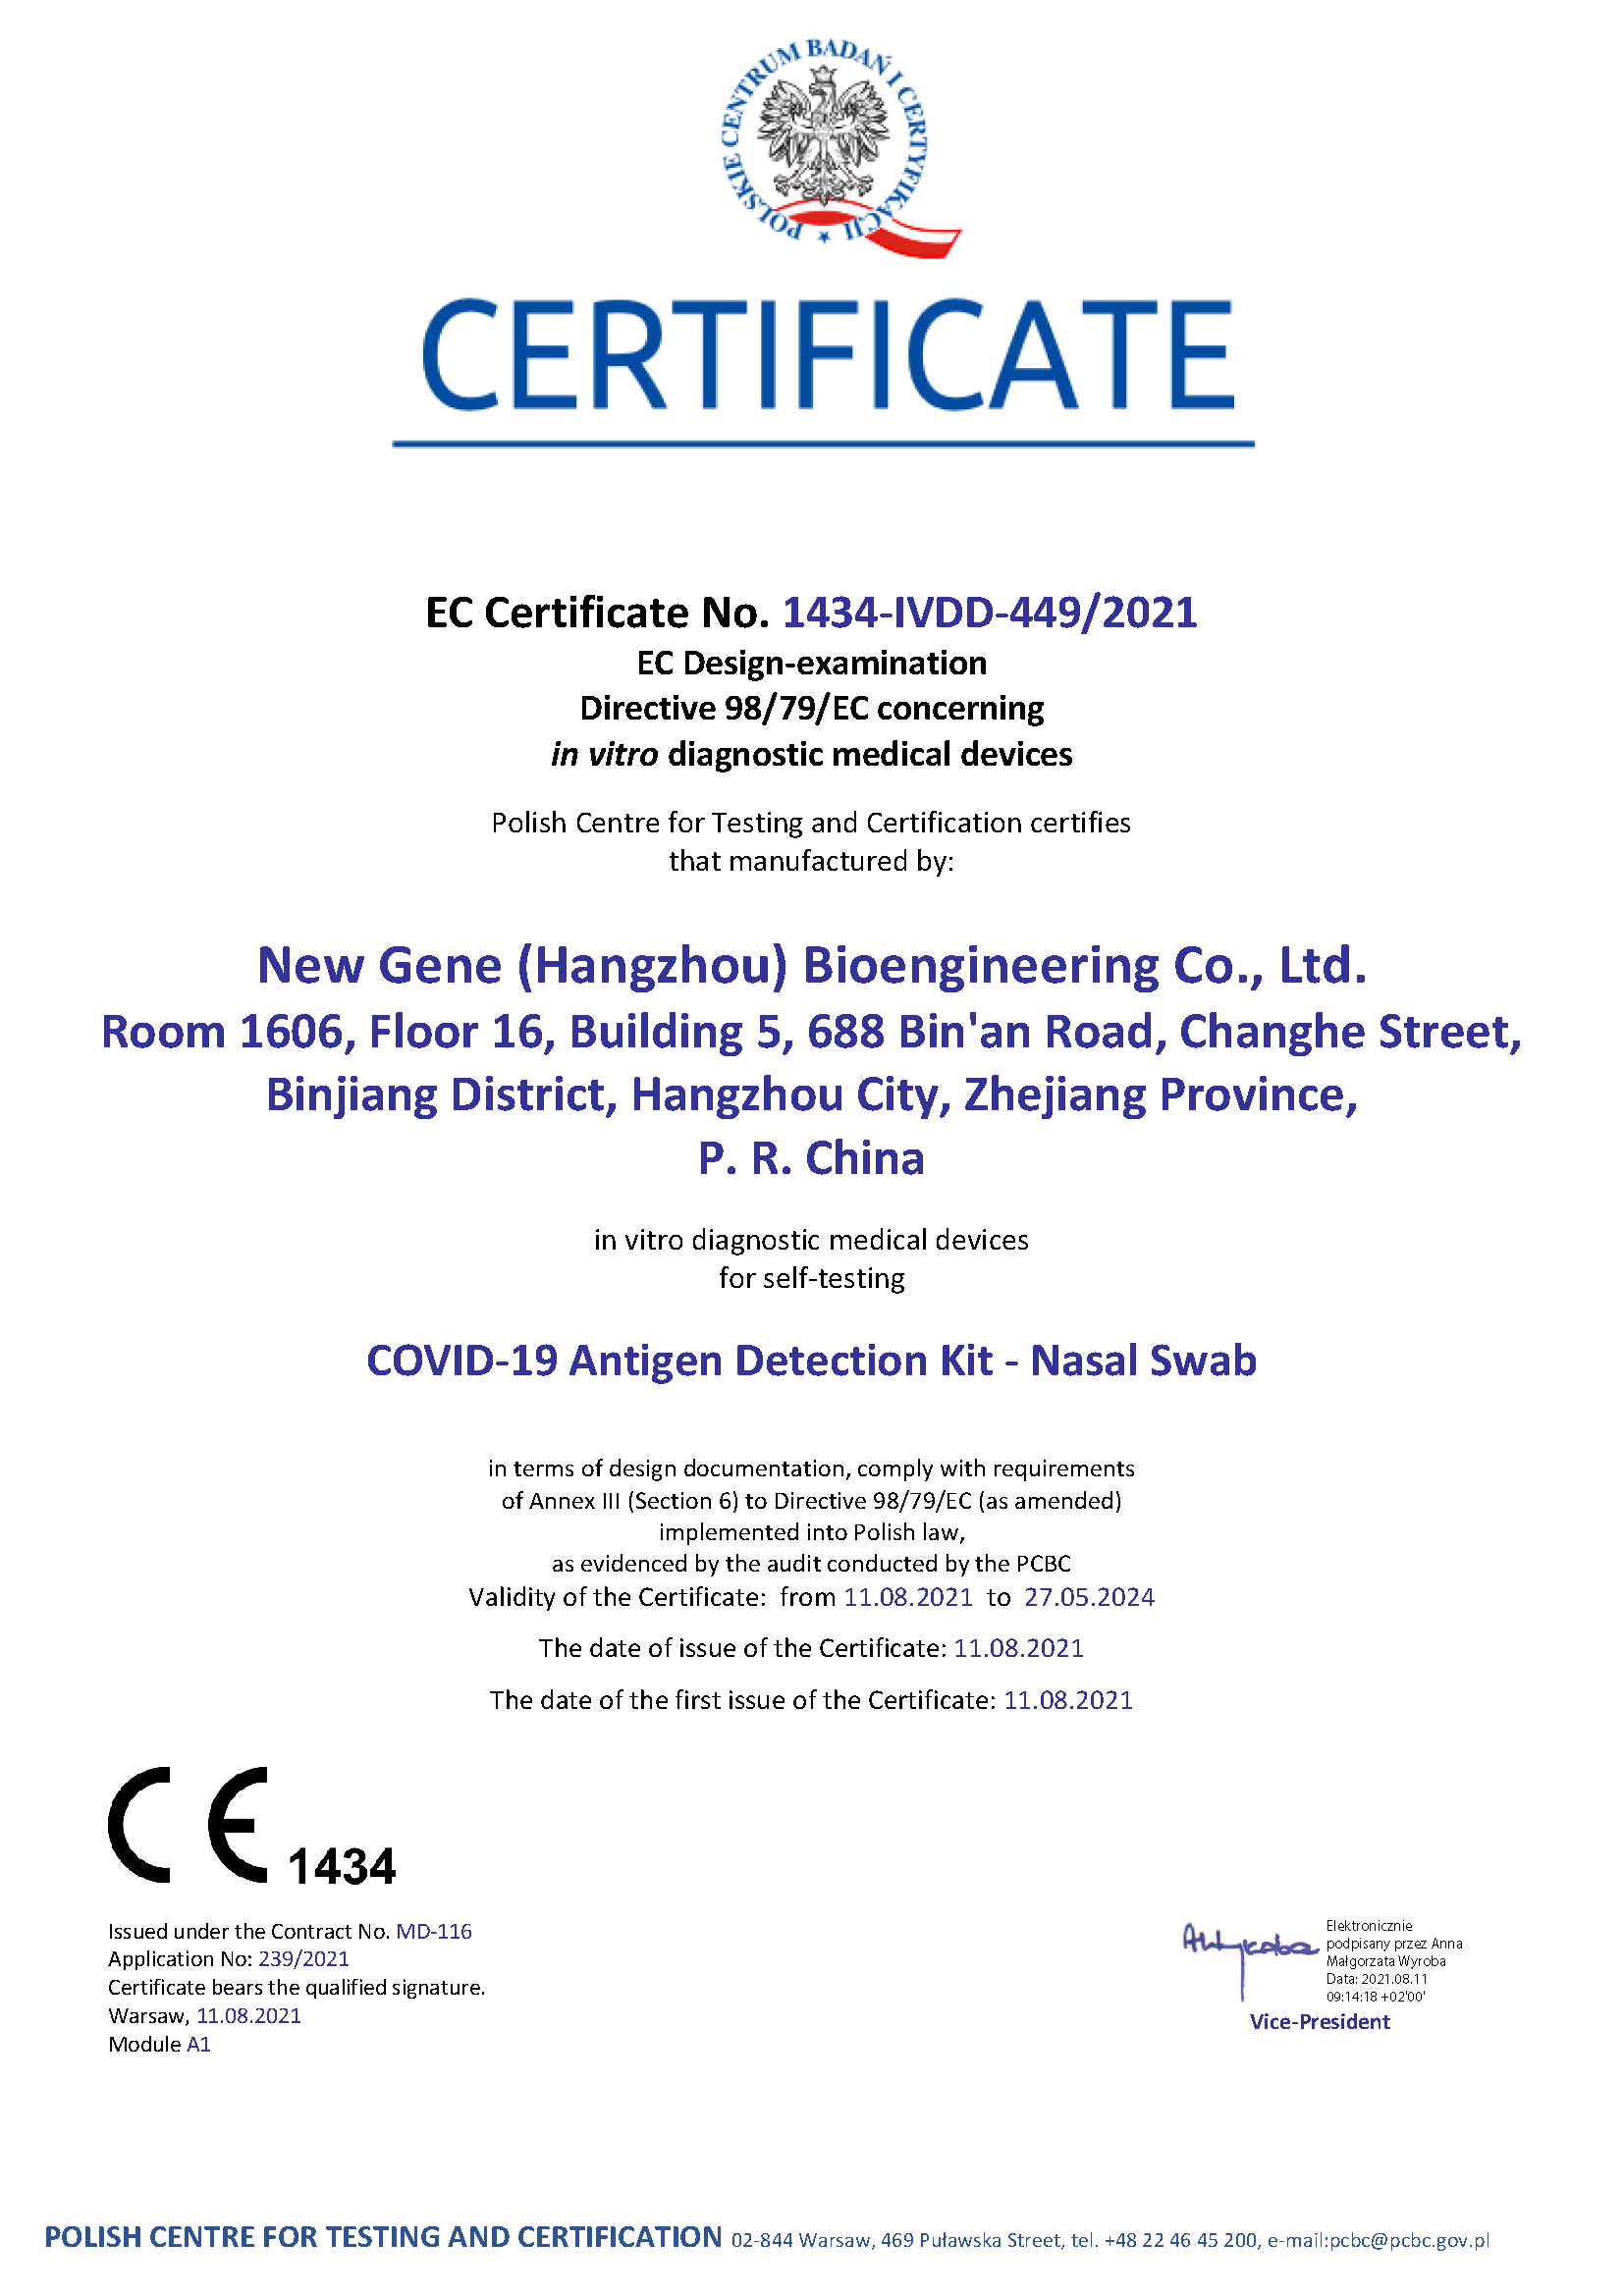 Bagong Gene COVID-19 Antigen Detection Kit - Self Test Certificate（PCBC 1434)